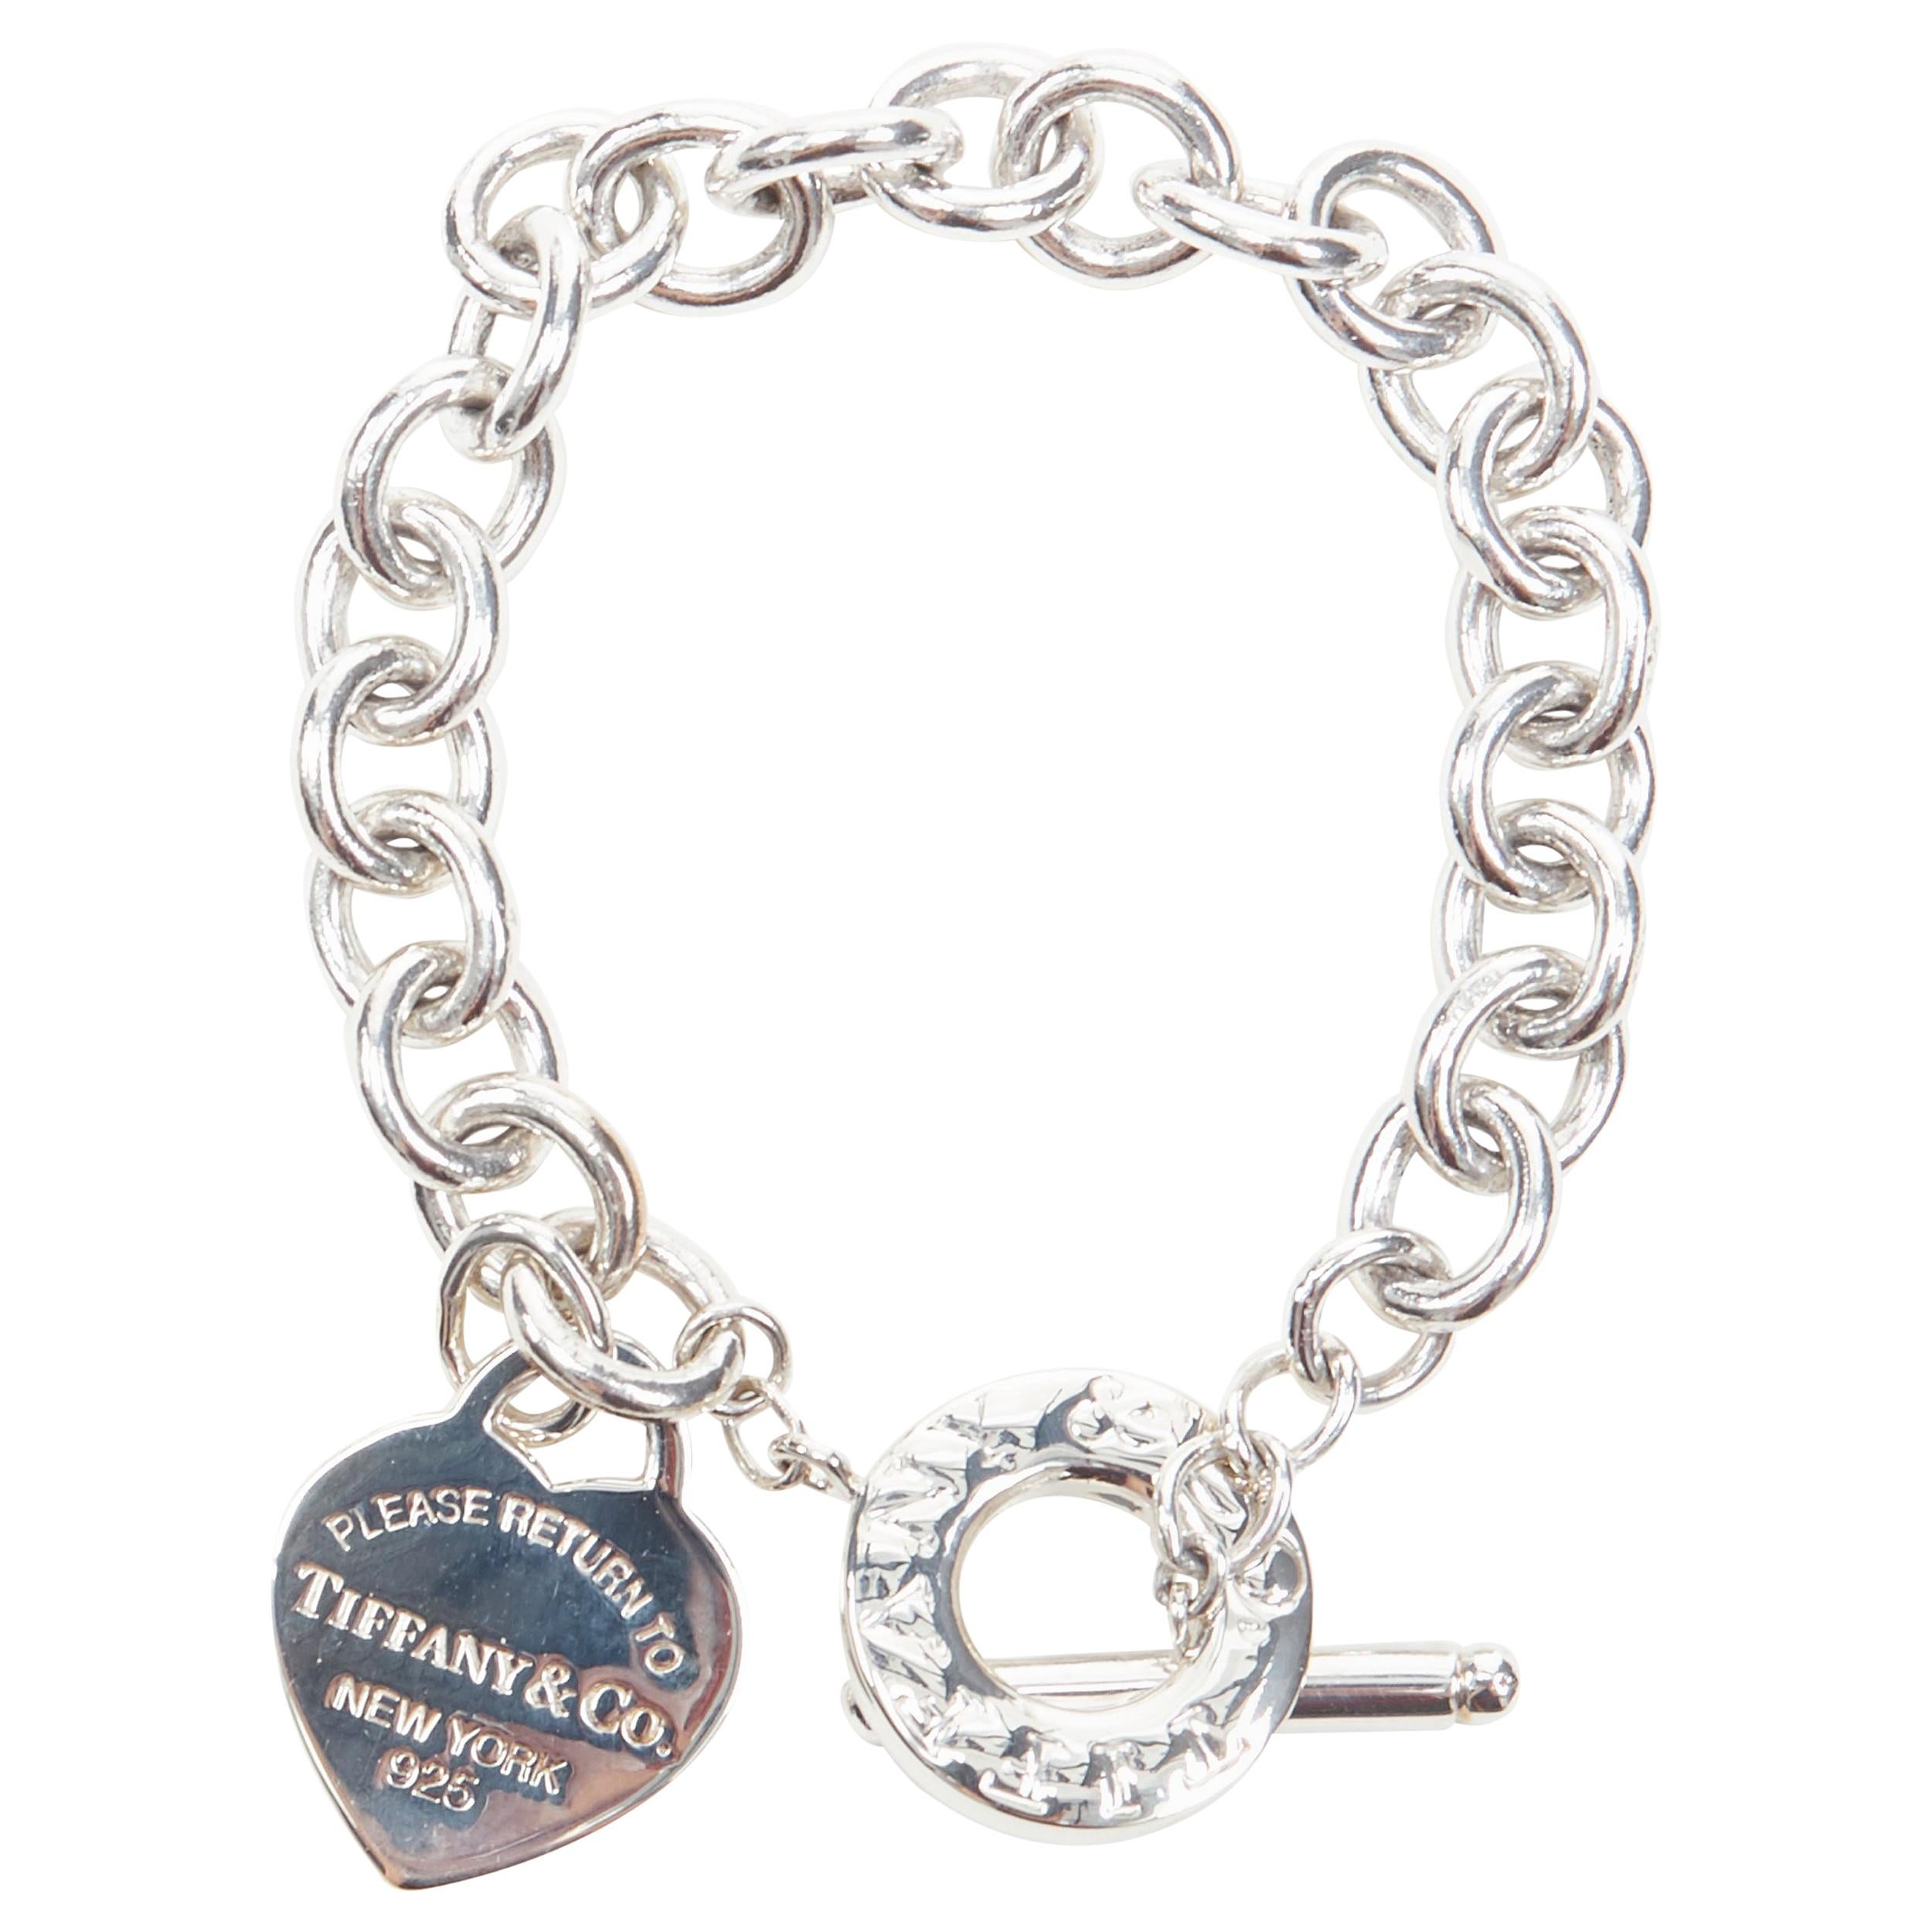 TIFFANY & CO. sterling silver Please Return To Tiffany New York toggle bracelet